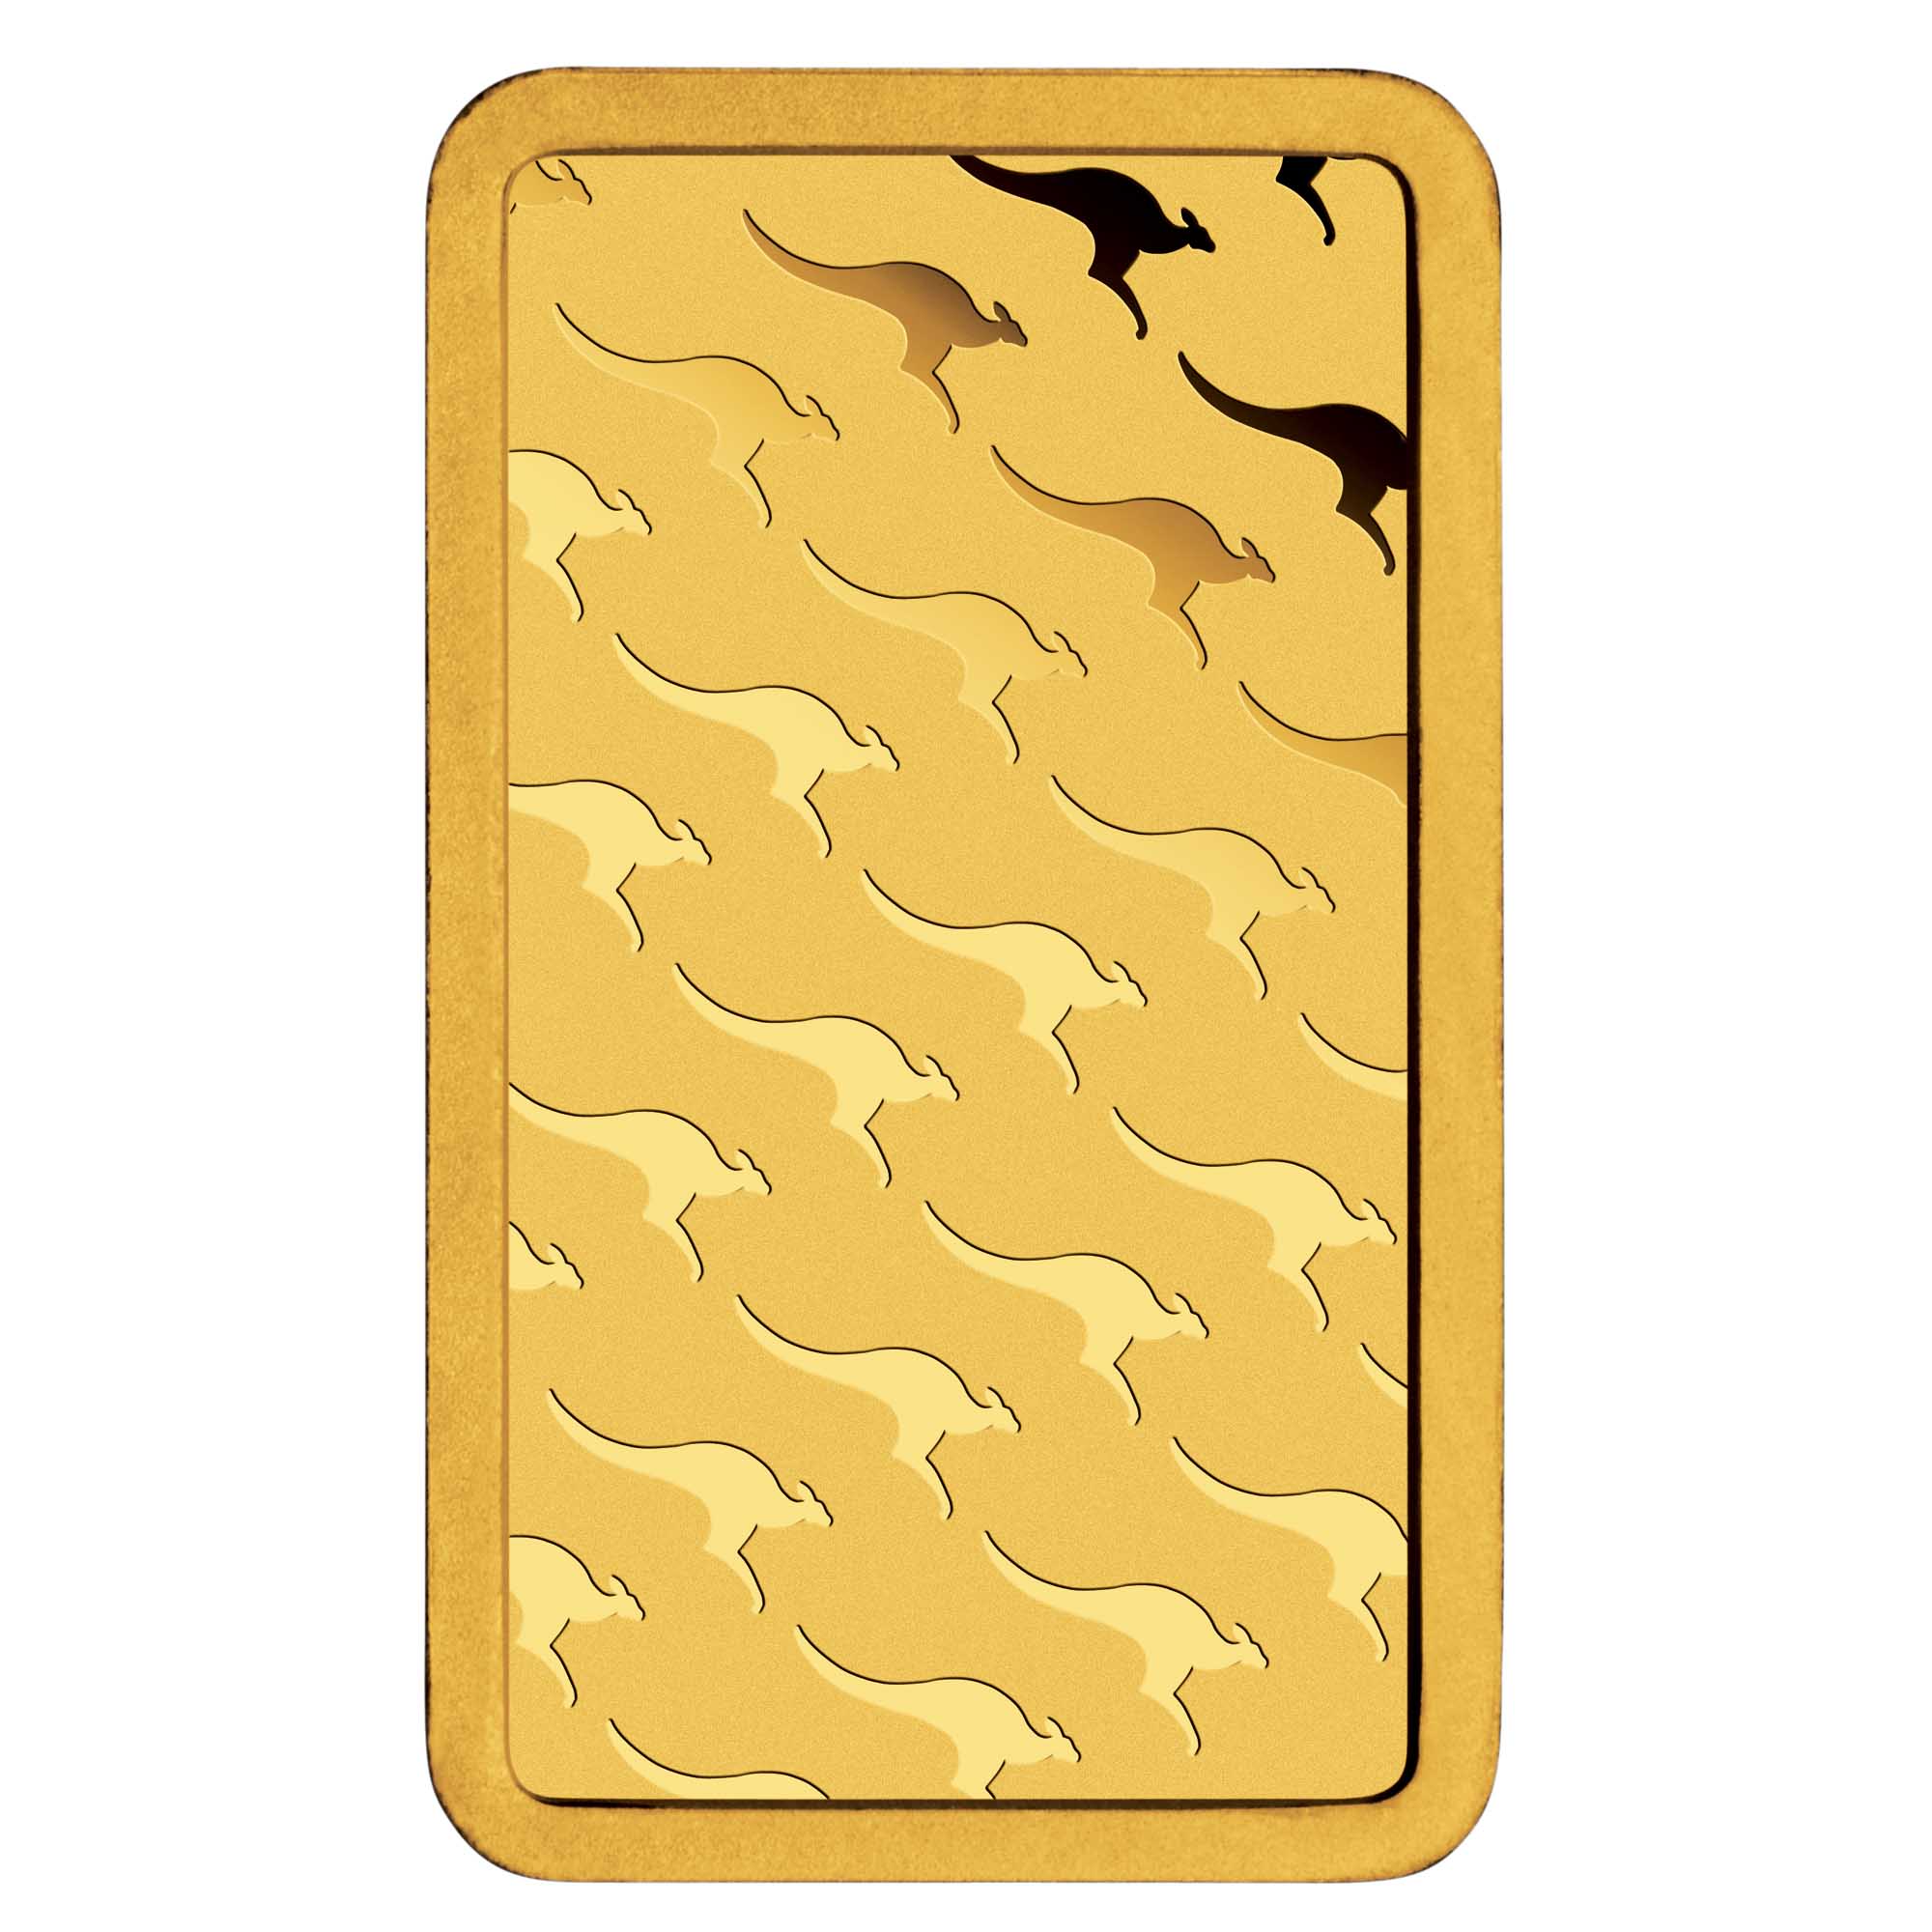 Kangaroo 20g Minted Gold Bar